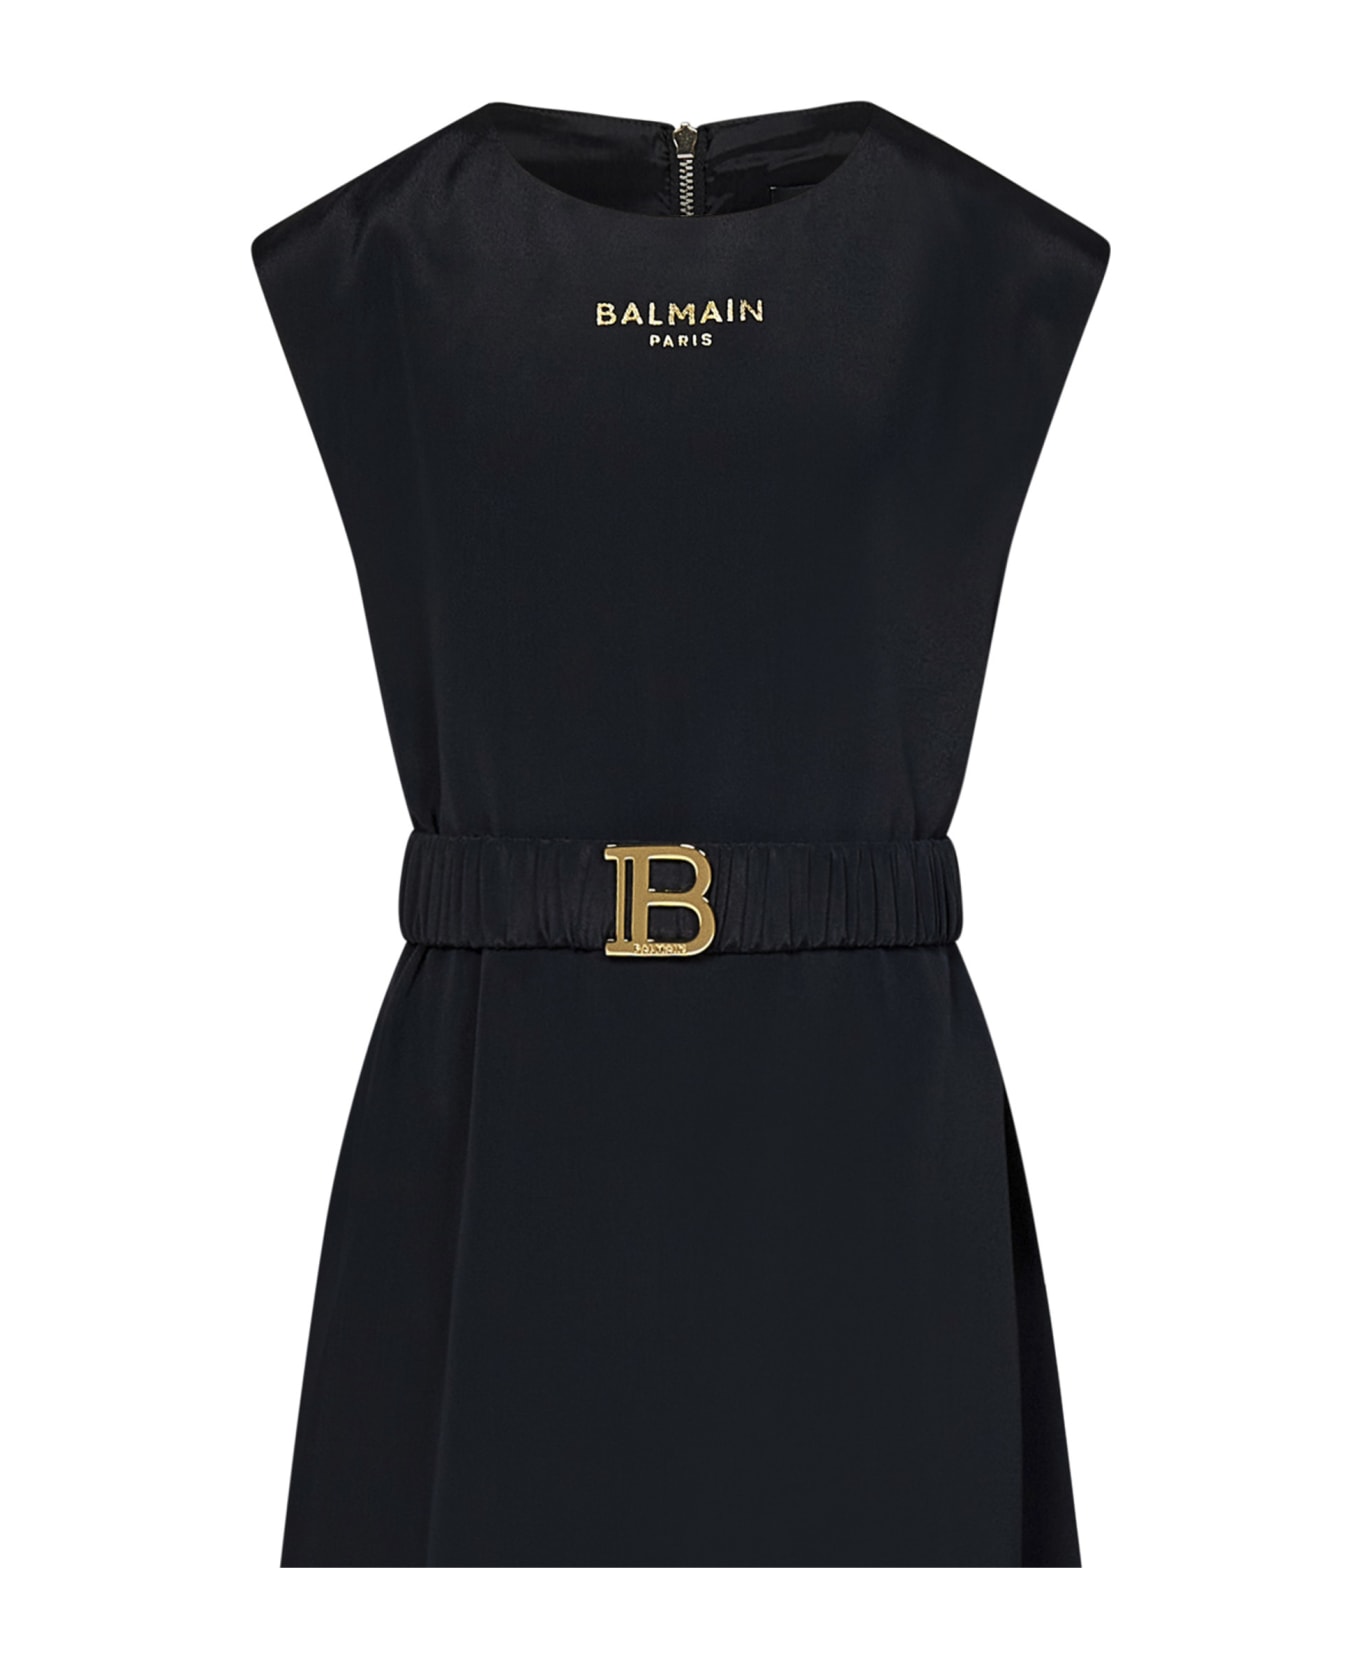 Balmain Dress - Or